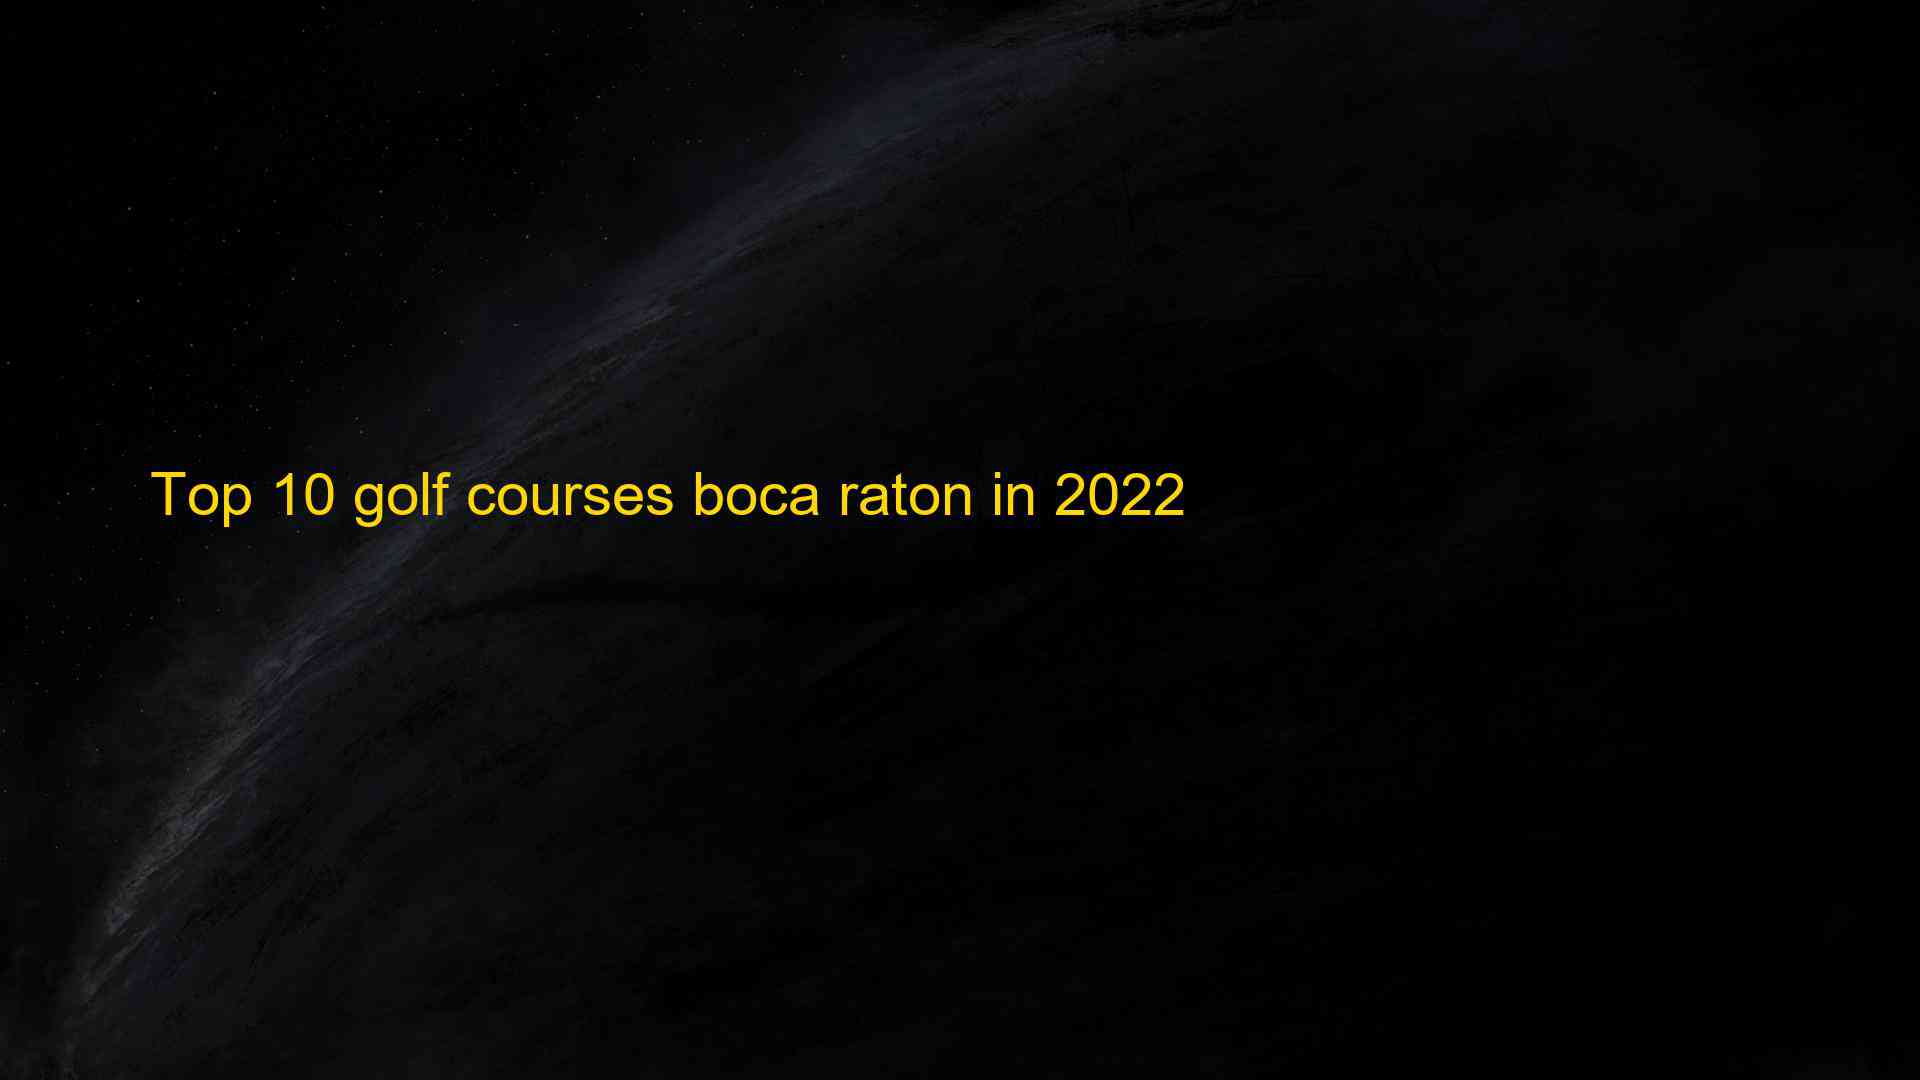 Top 10 golf courses boca raton in 2022 1660891480